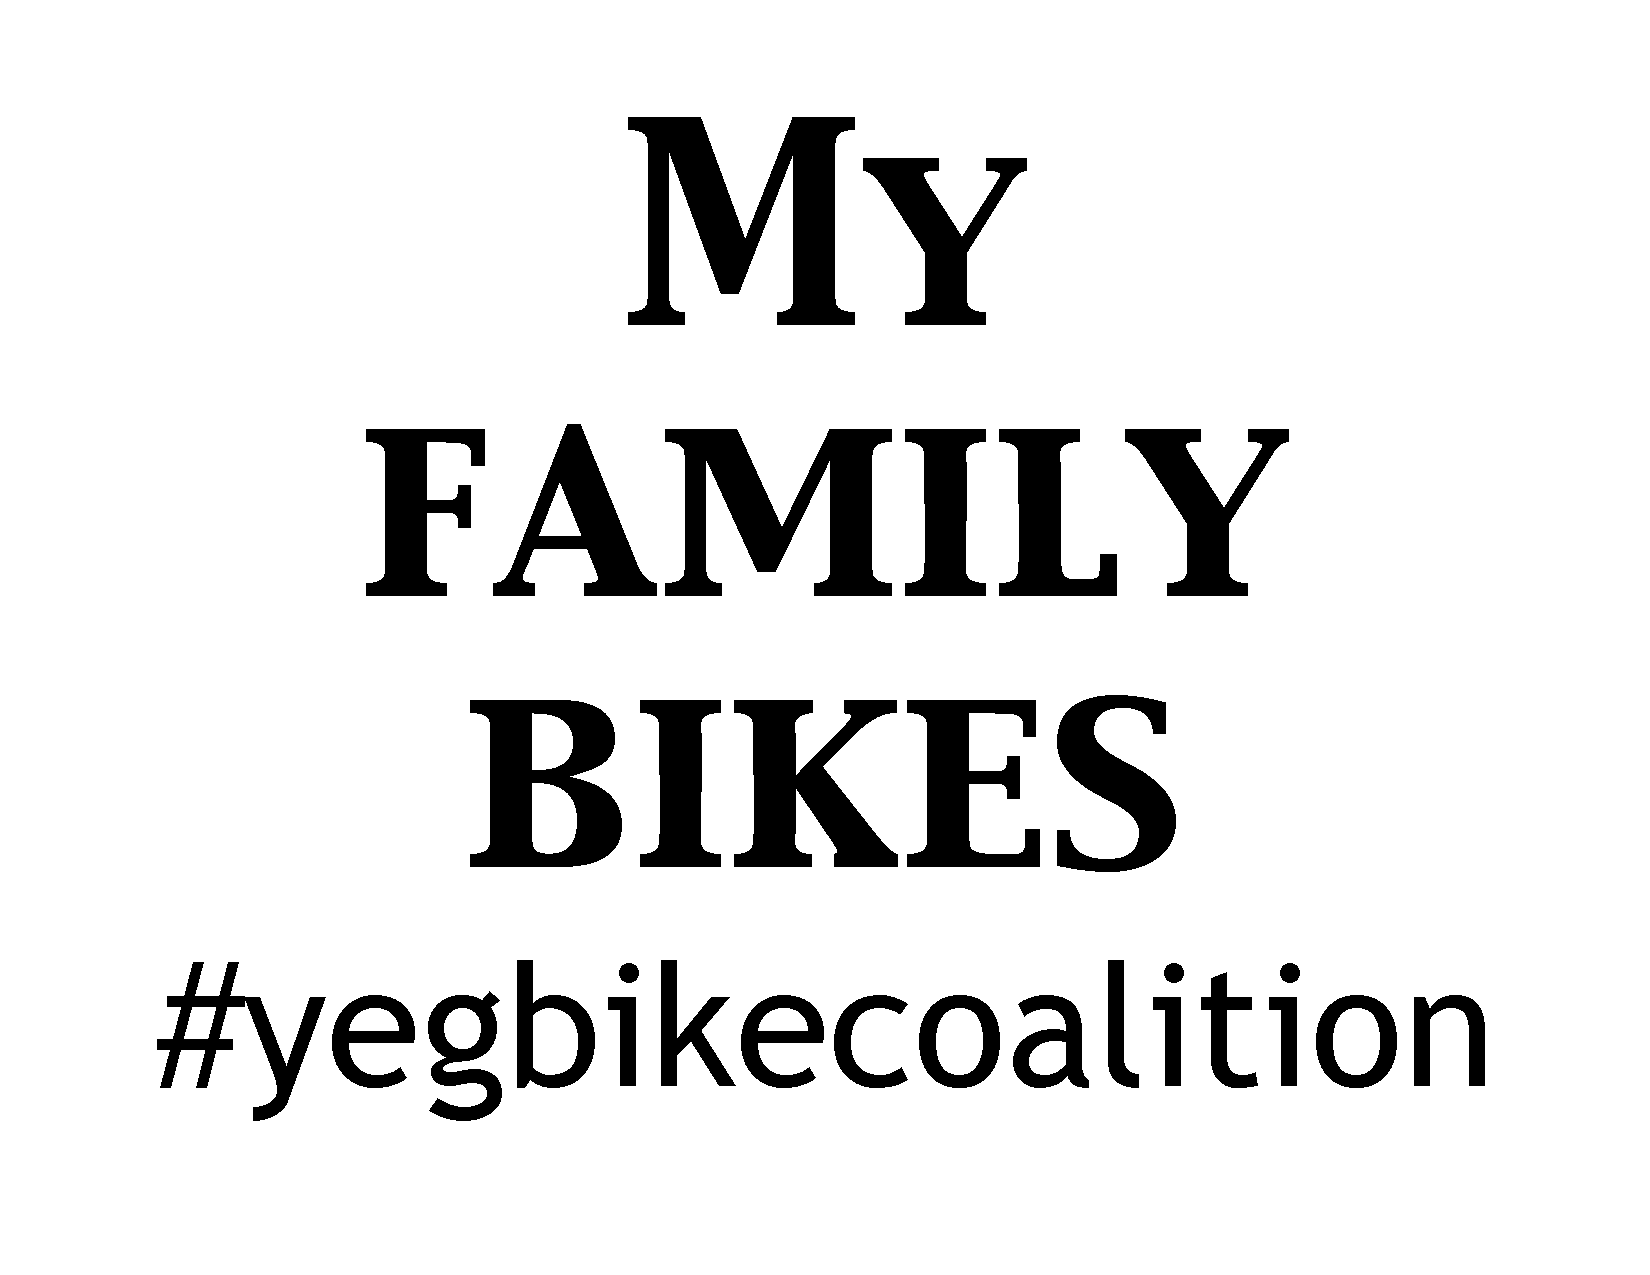 My family bikes